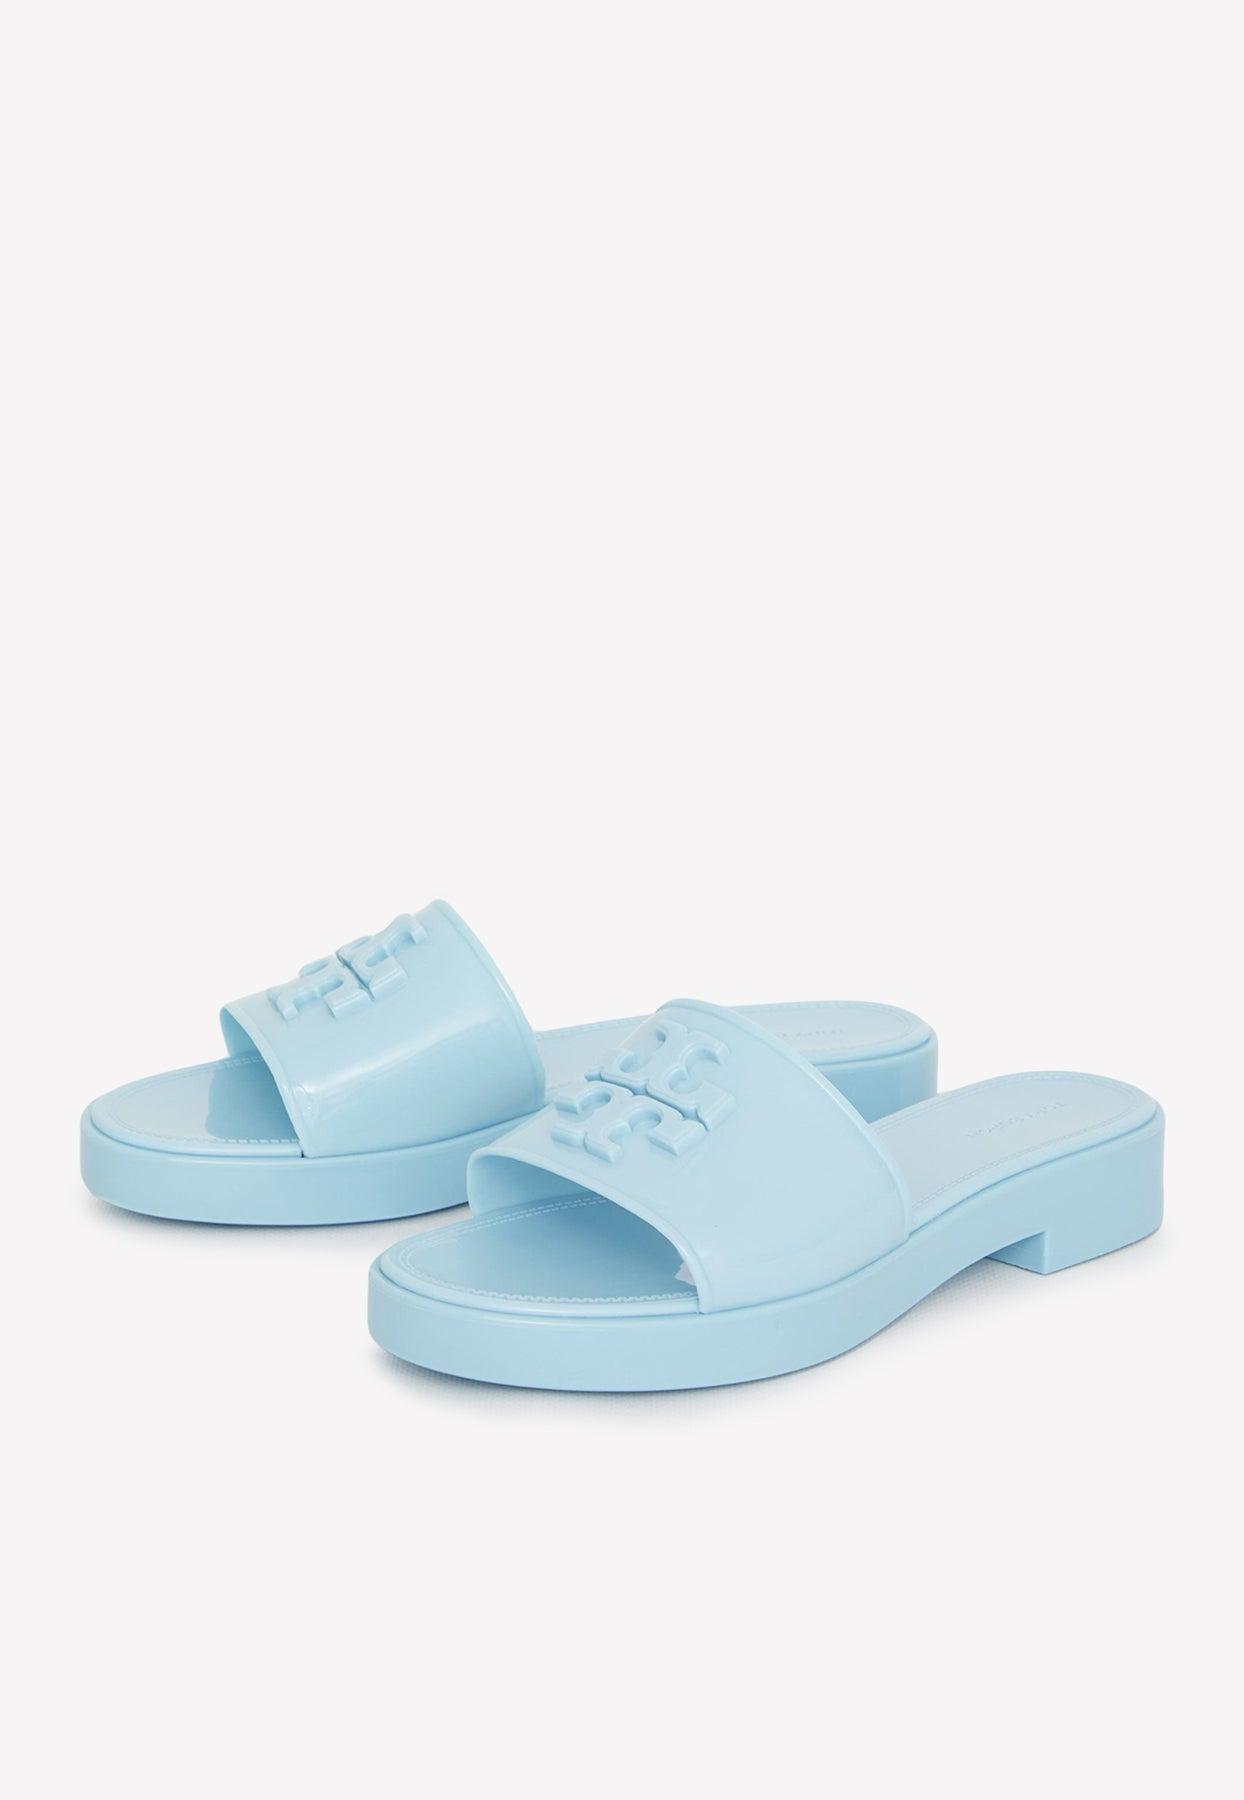 Tory Burch Eleanor Jelly Slide Sandals in Blue | Lyst